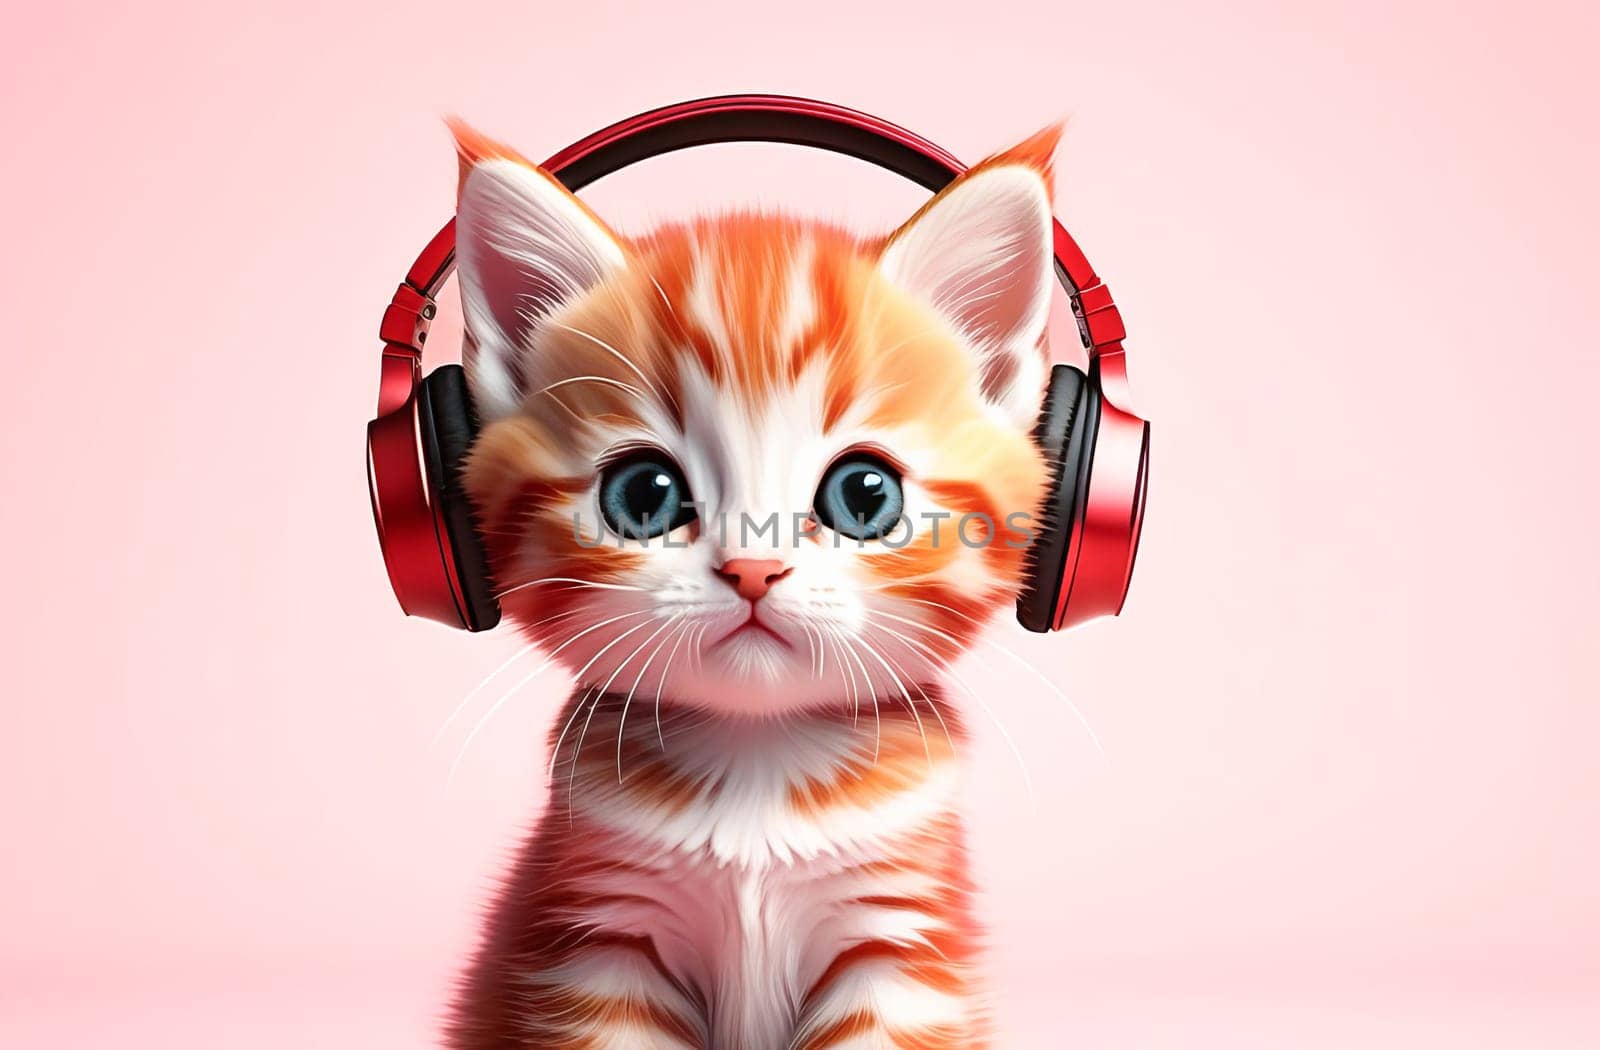 Adorable cartoon red kitten wearing stylish headphones. by OlgaGubskaya